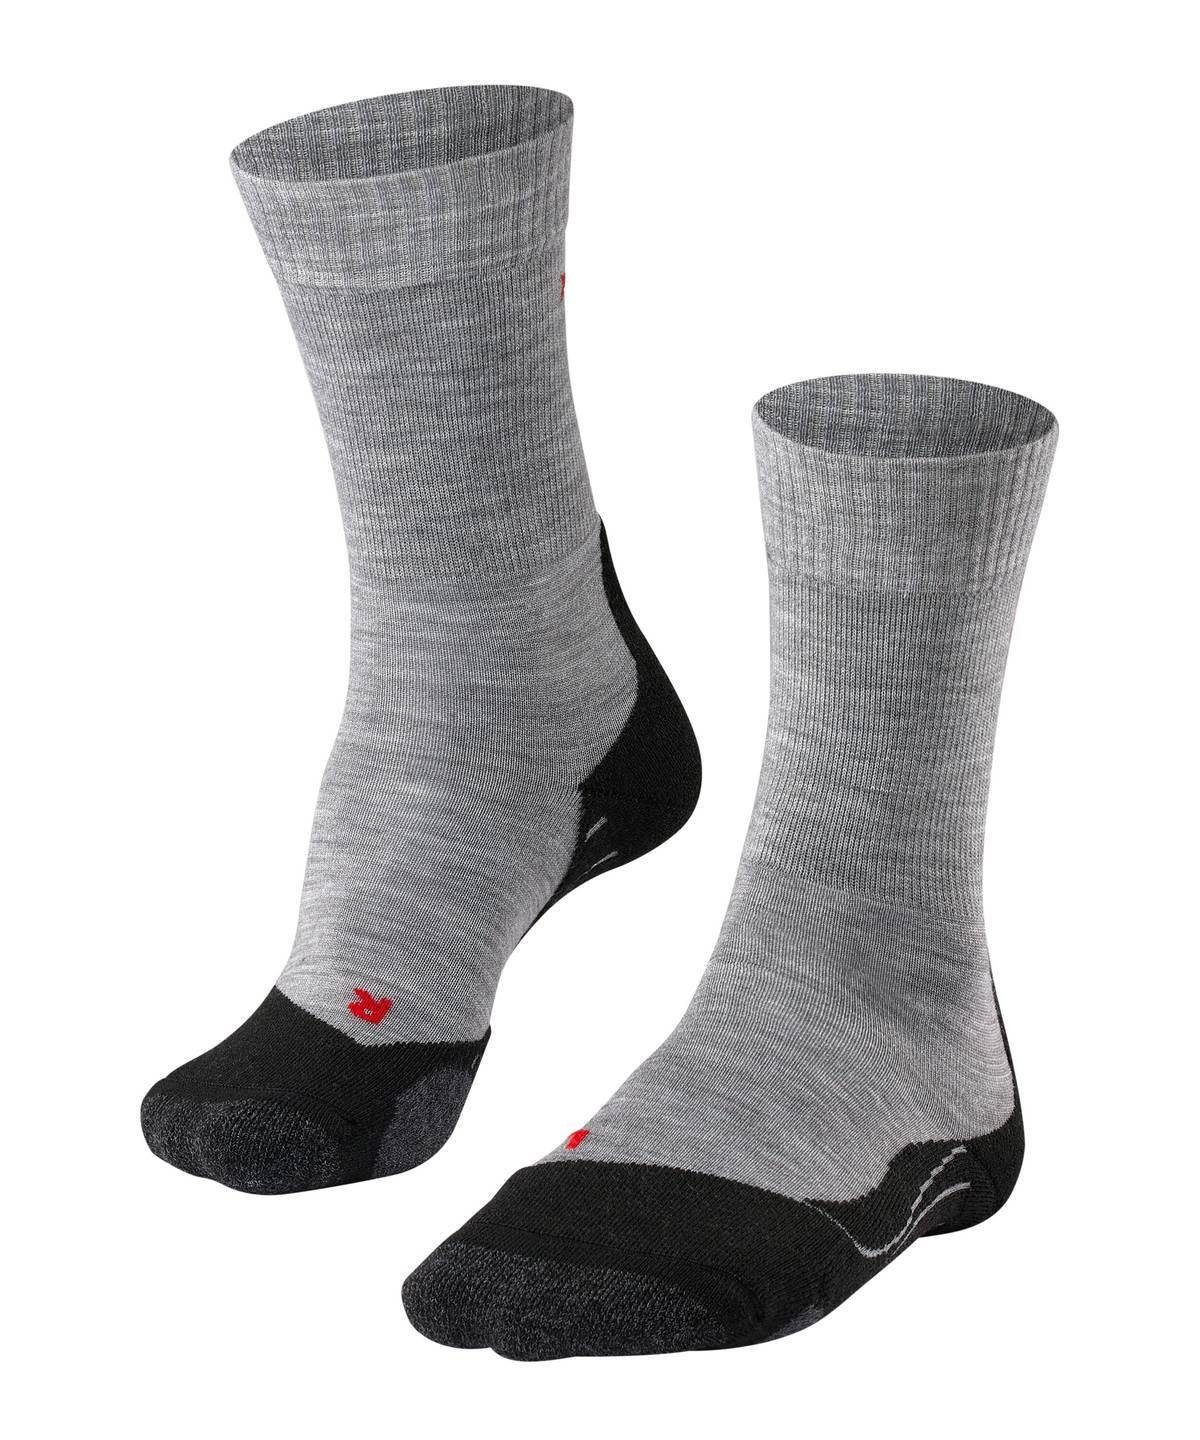 FALKE Sportsocken Herren Socken - Trekking Socken TK2, Polsterung Grau